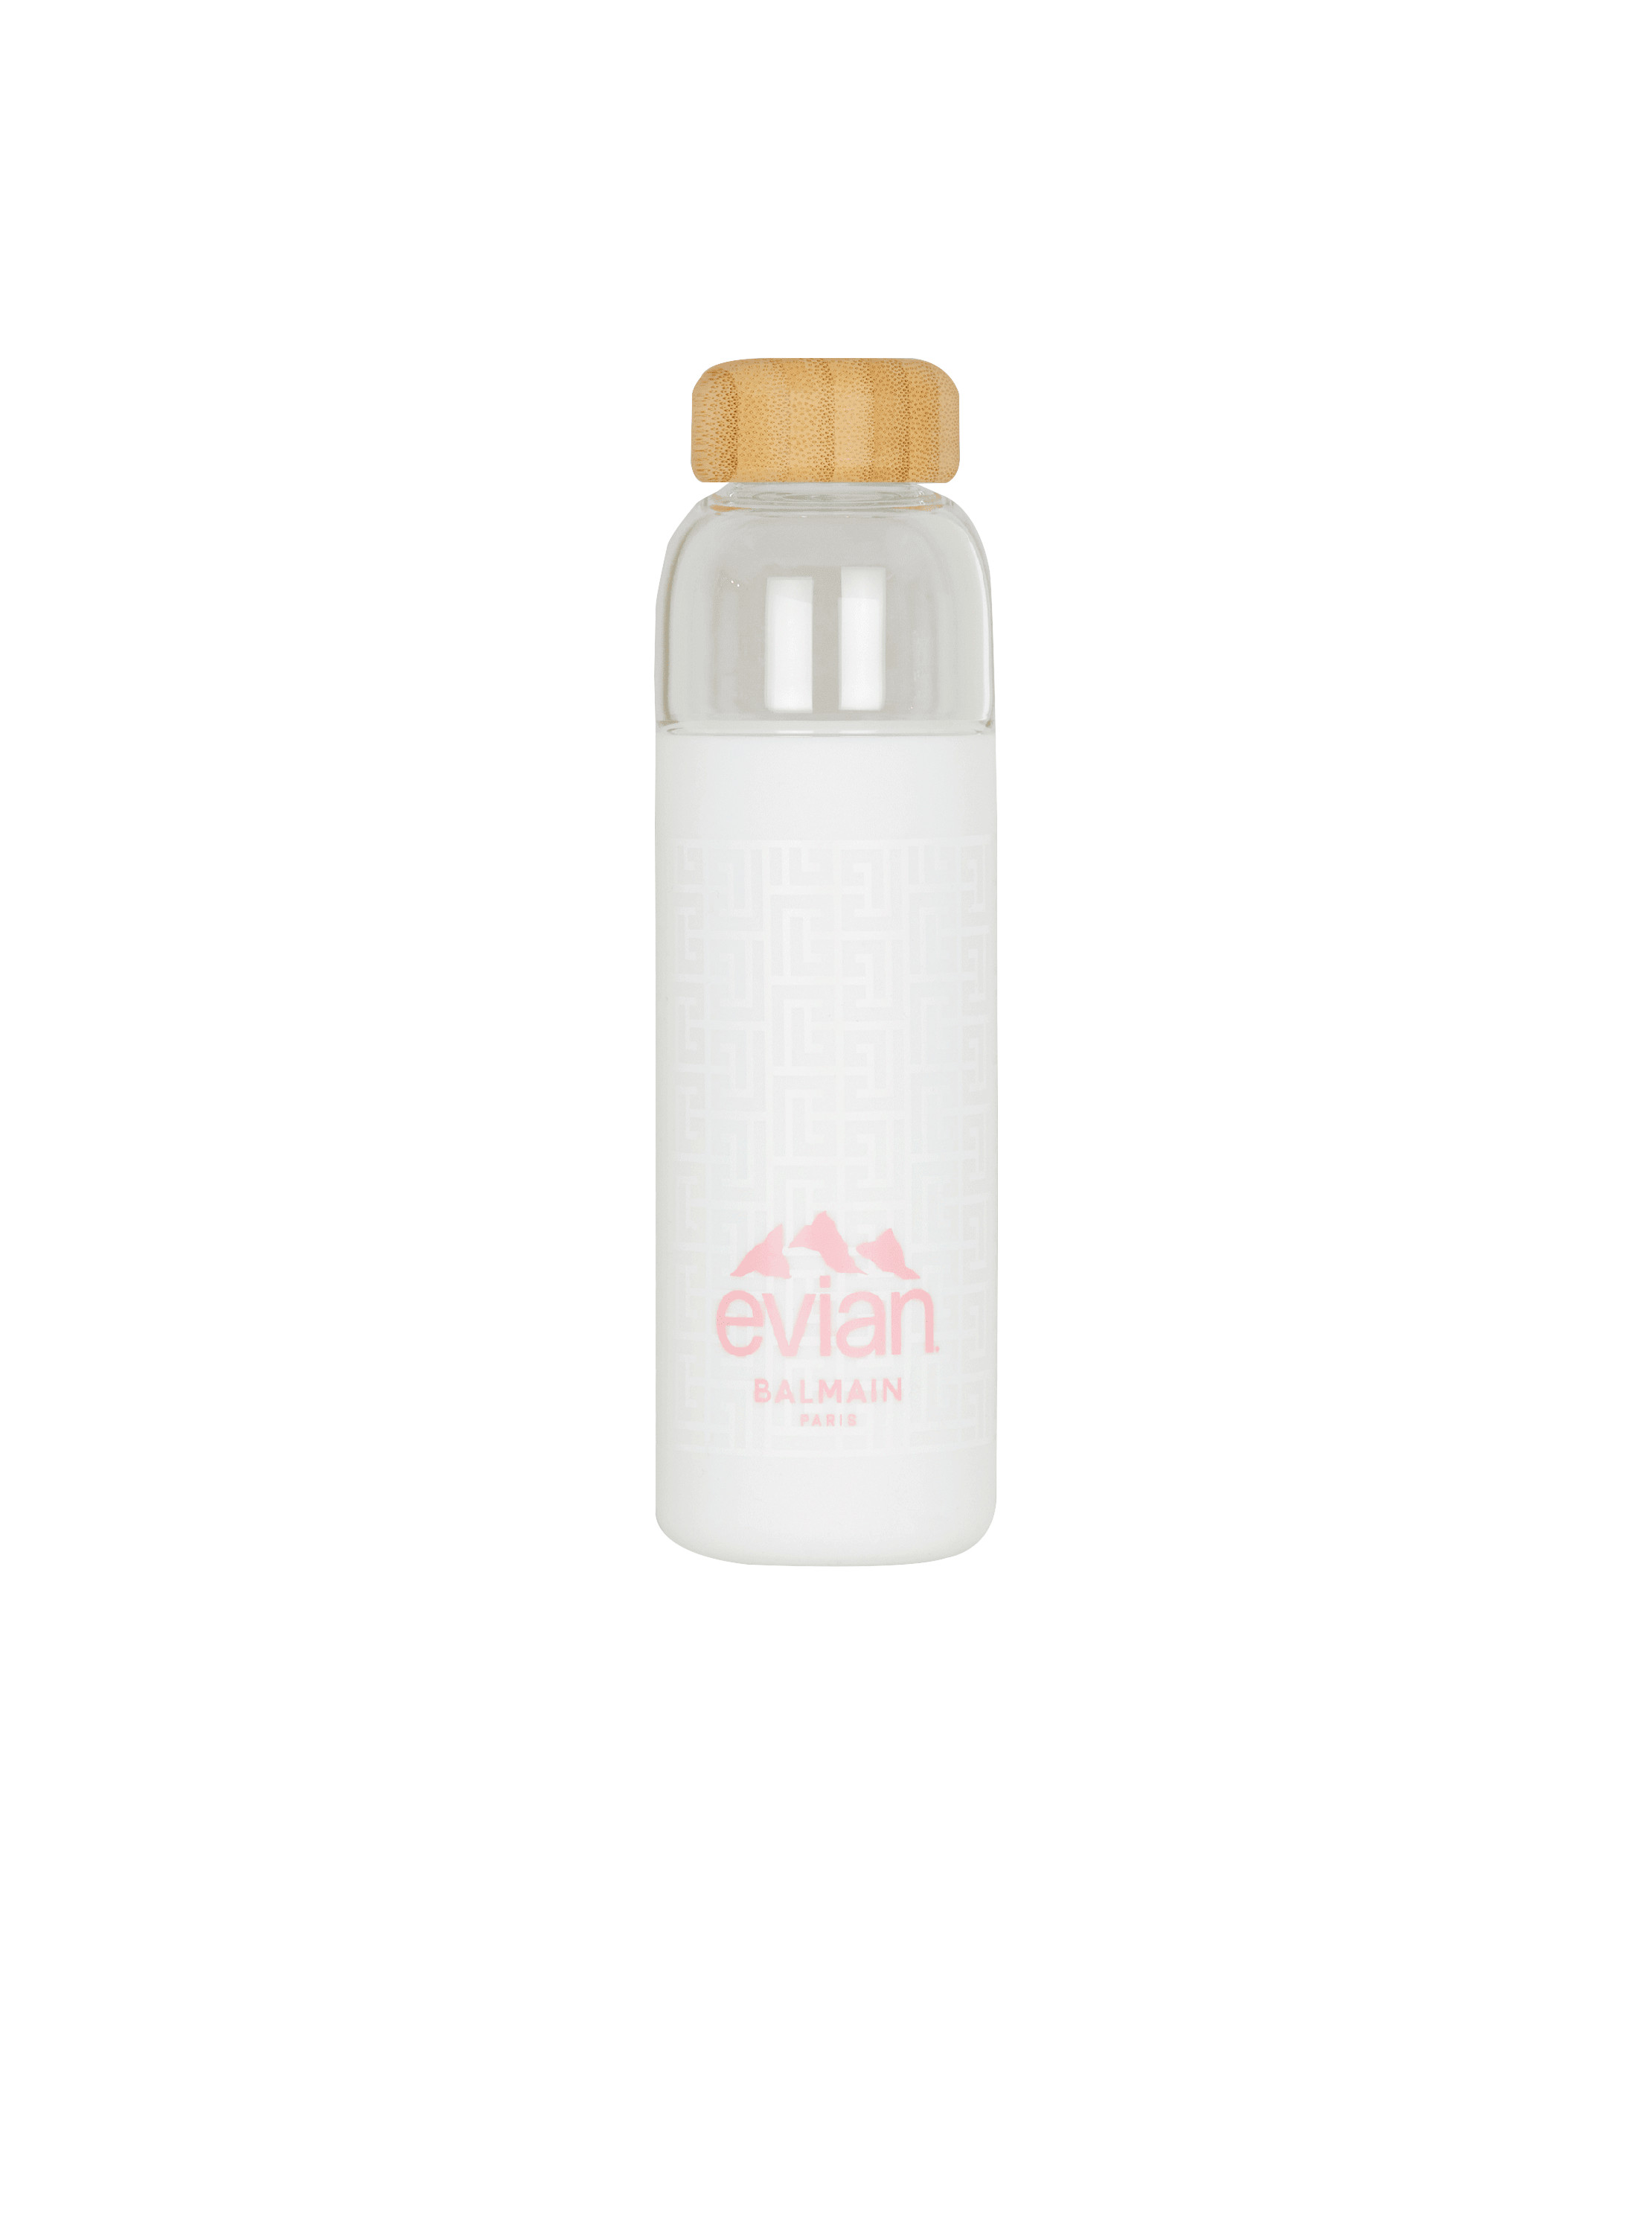 Balmain x Evian - Bottle